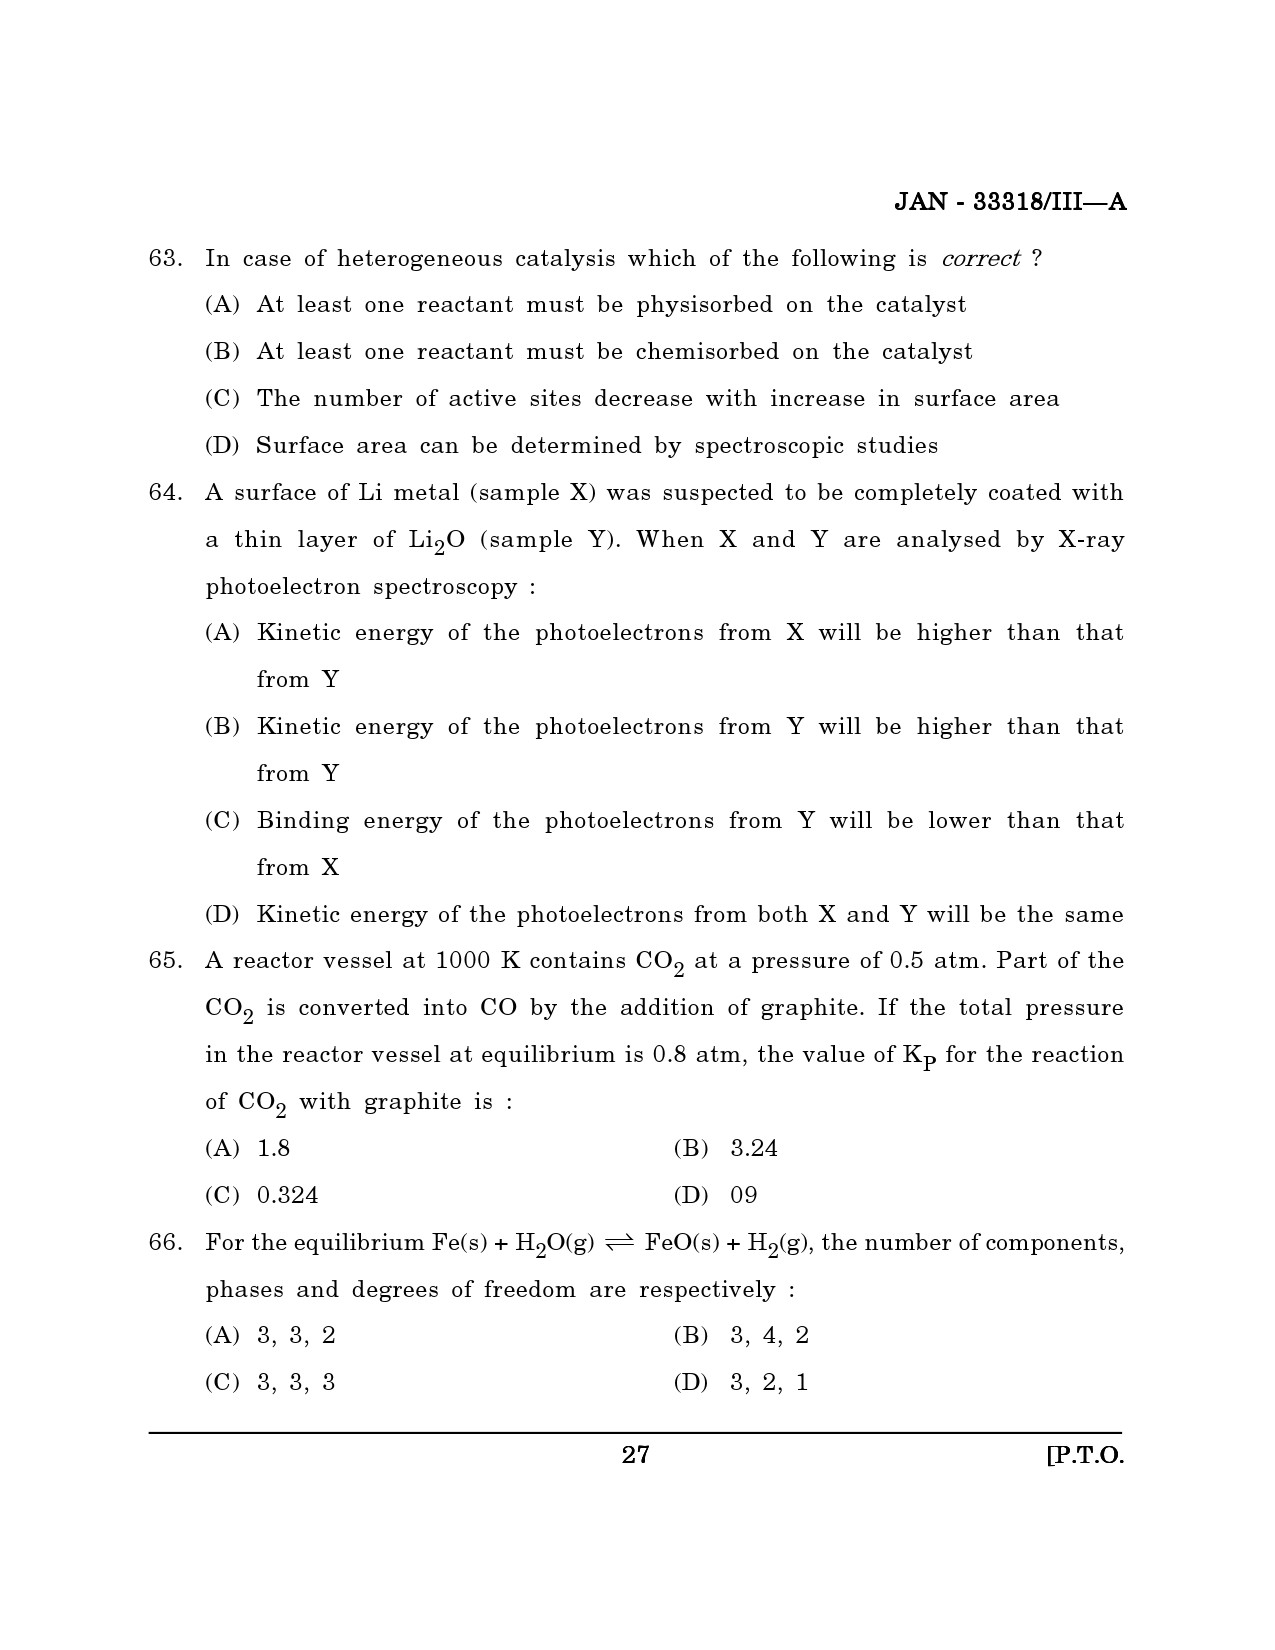 Maharashtra SET Chemical Sciences Question Paper III January 2018 26